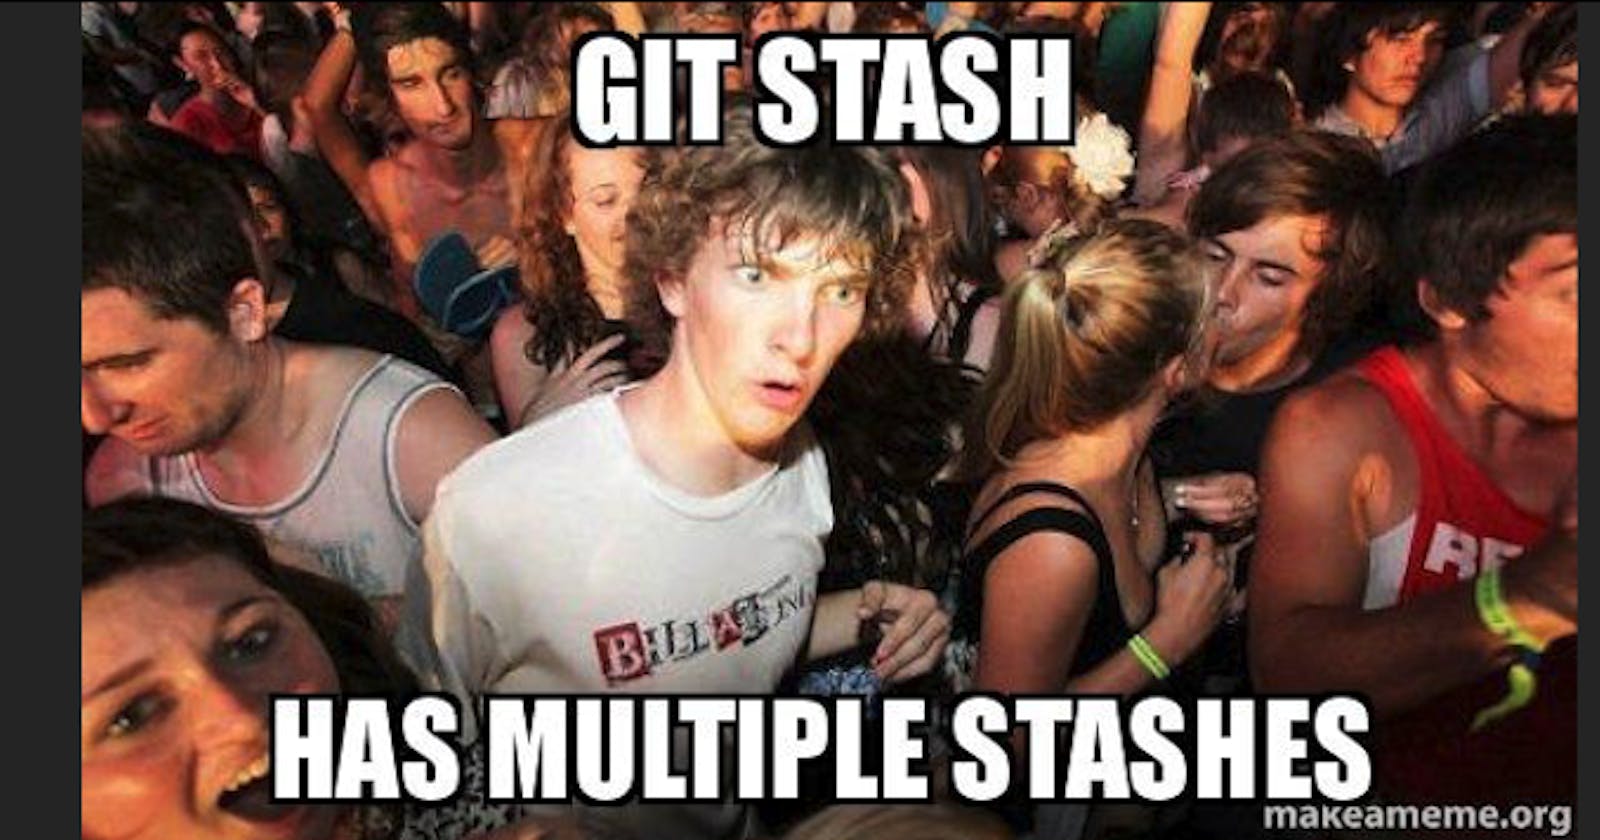 #gitPanic - Stash